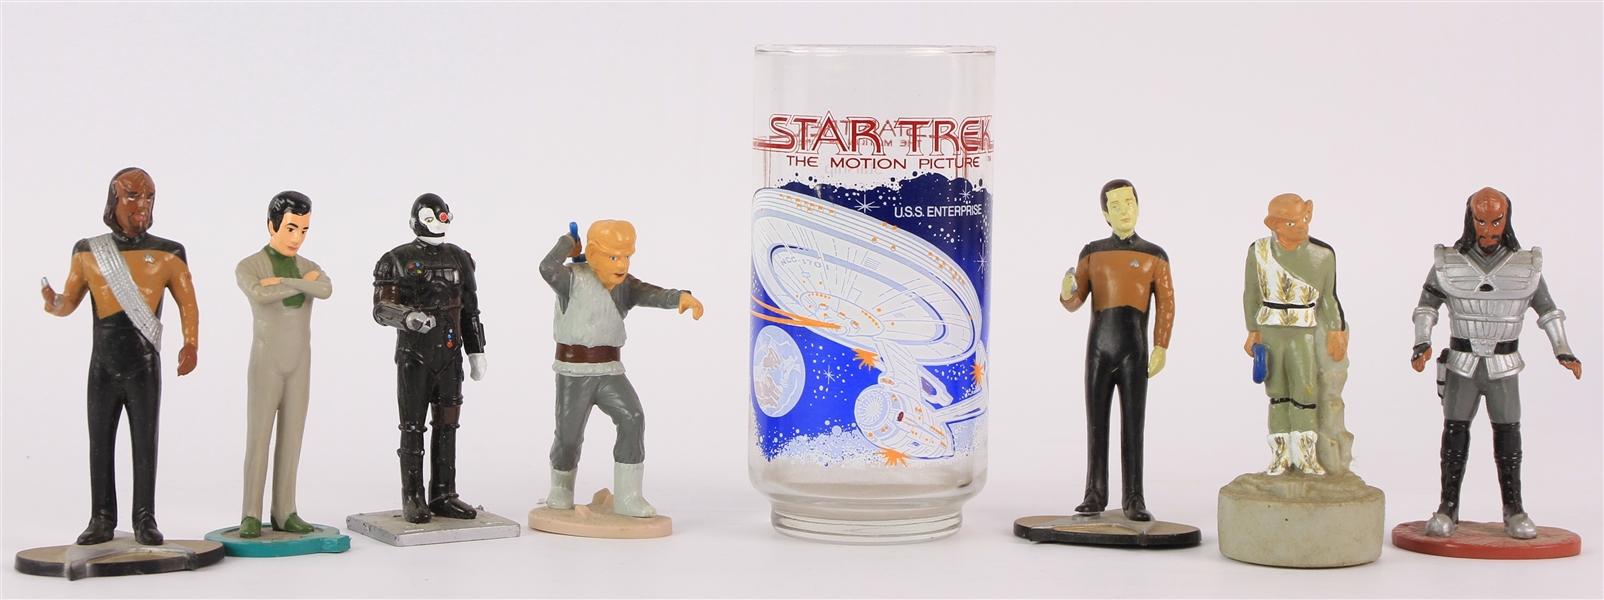 1970s-2000s Star Trek Memorabilia Collection - Lot of 8 w/ USS Enterprise Drinking Glass & Action Figures